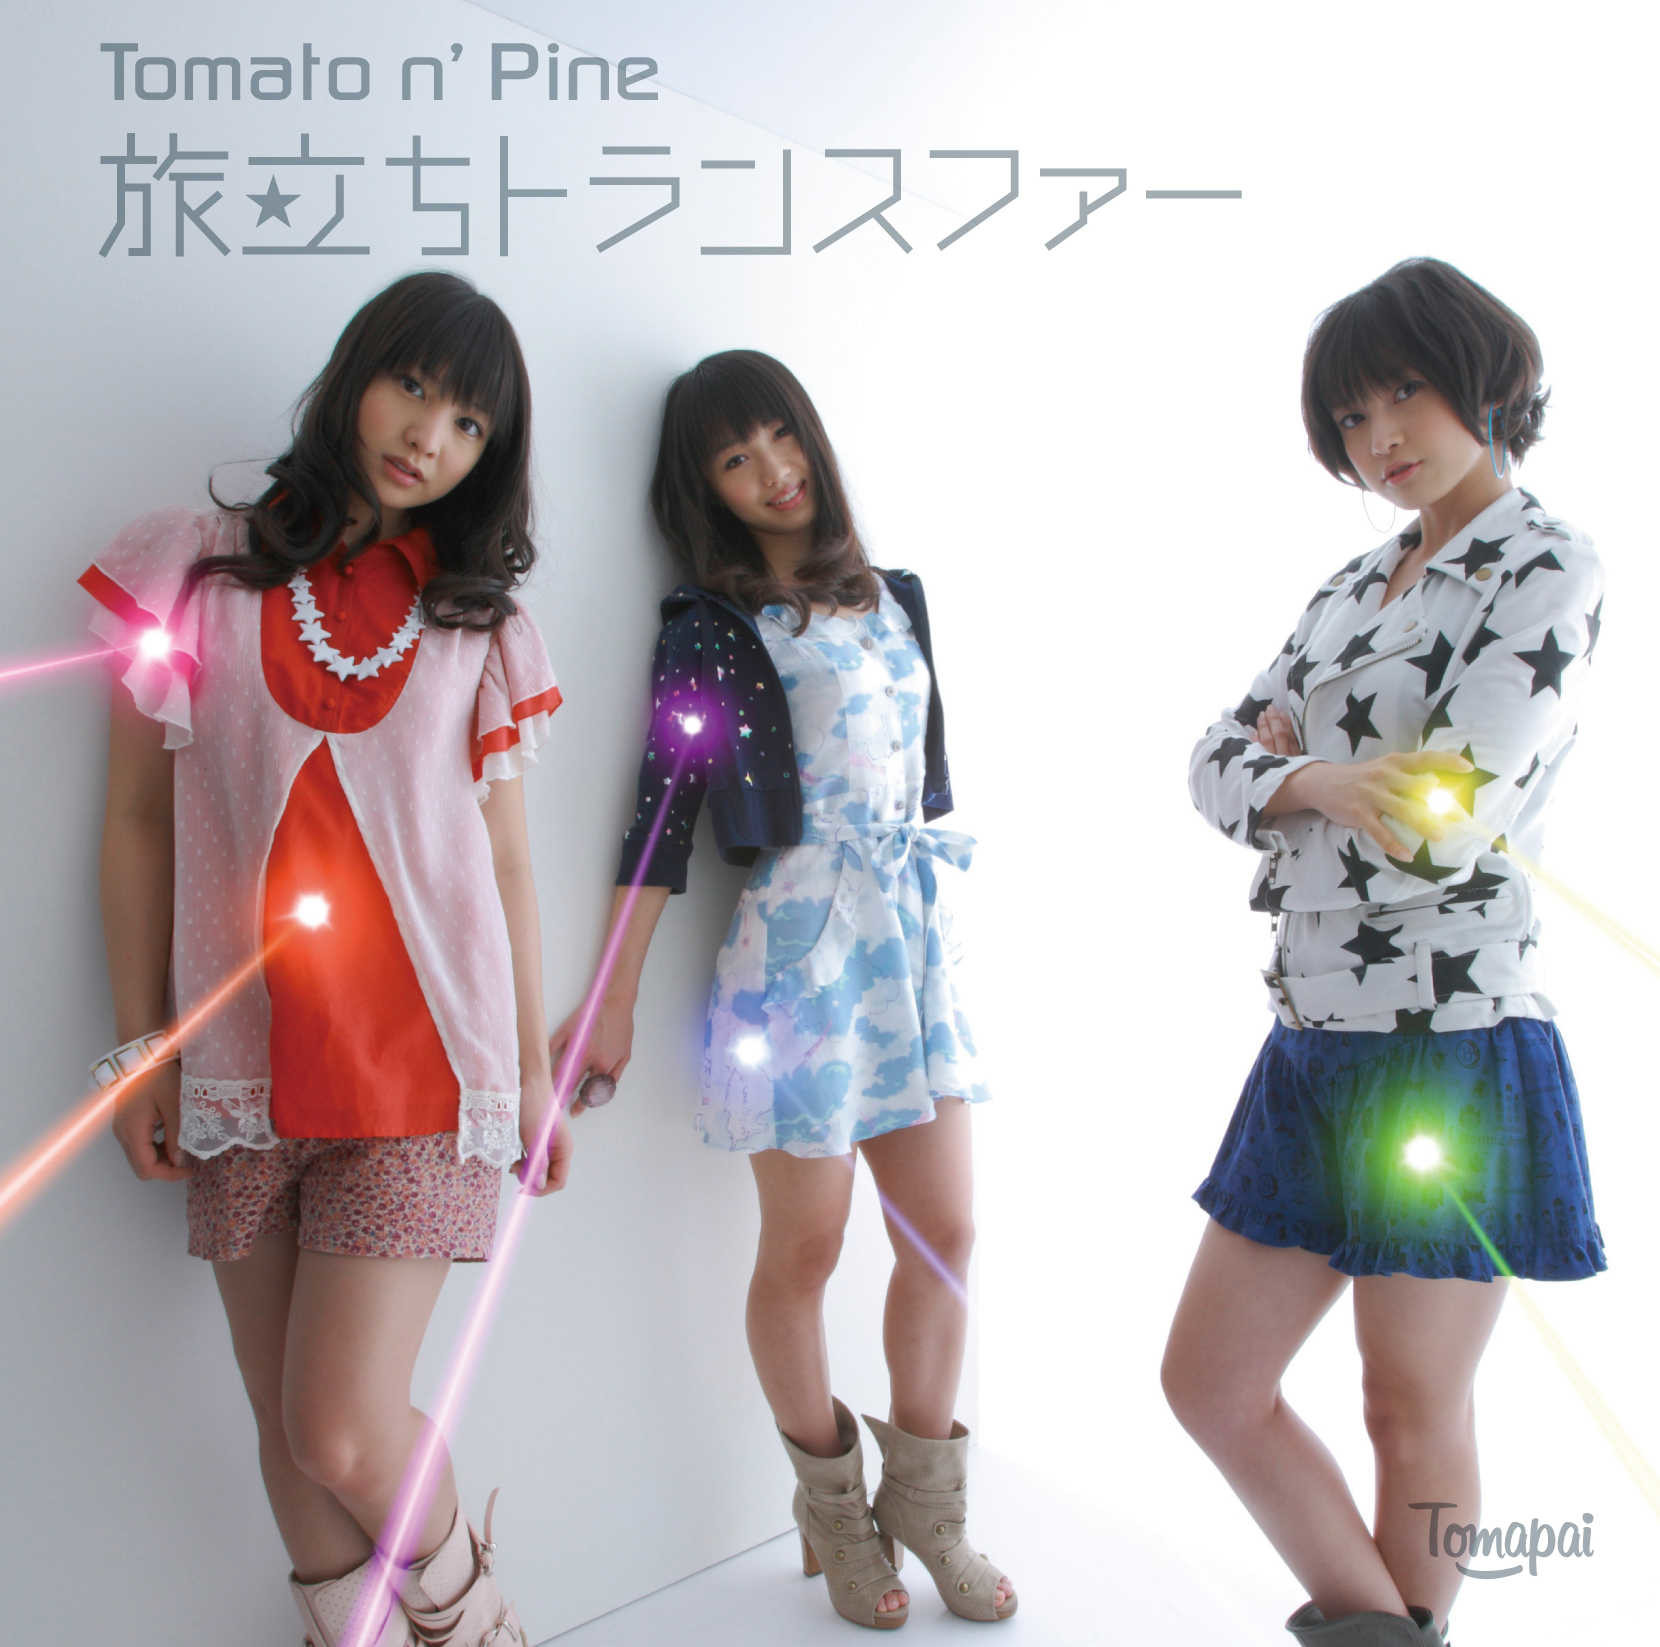 Tomato n Pine - Life is so beautiful